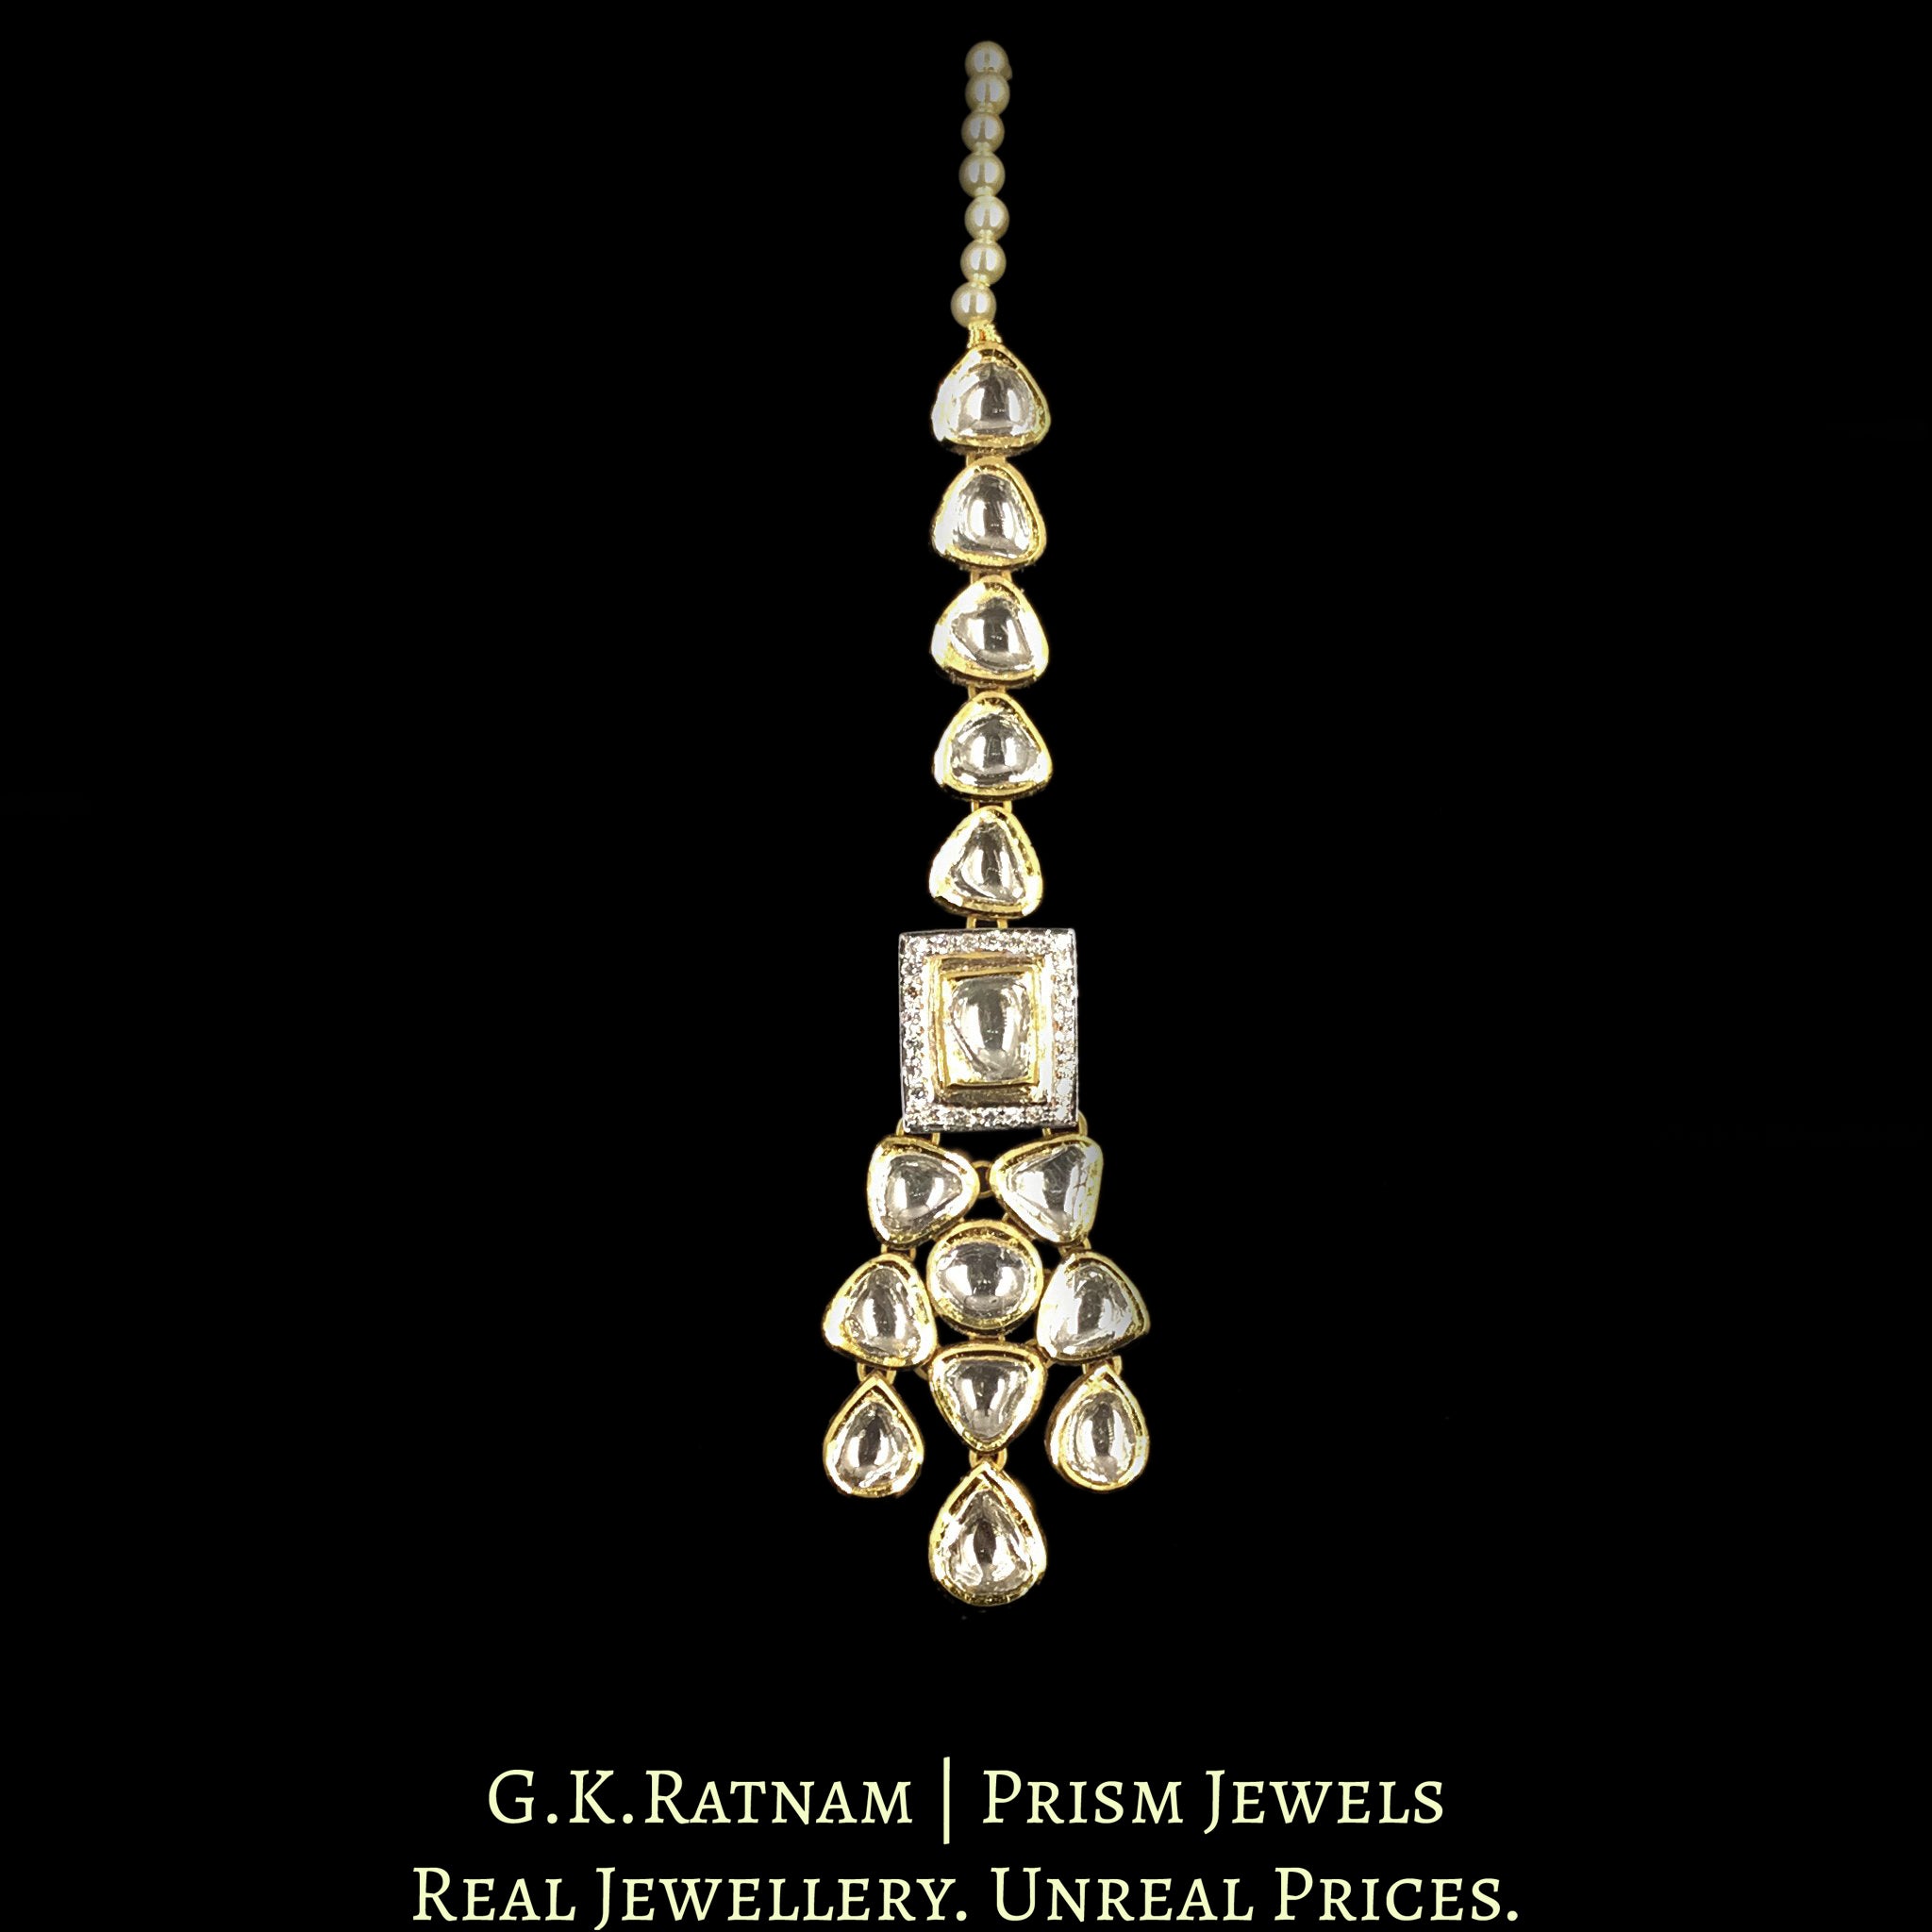 14k Gold and Diamond Polki Fusion Necklace Set With Maang Tika and Ring